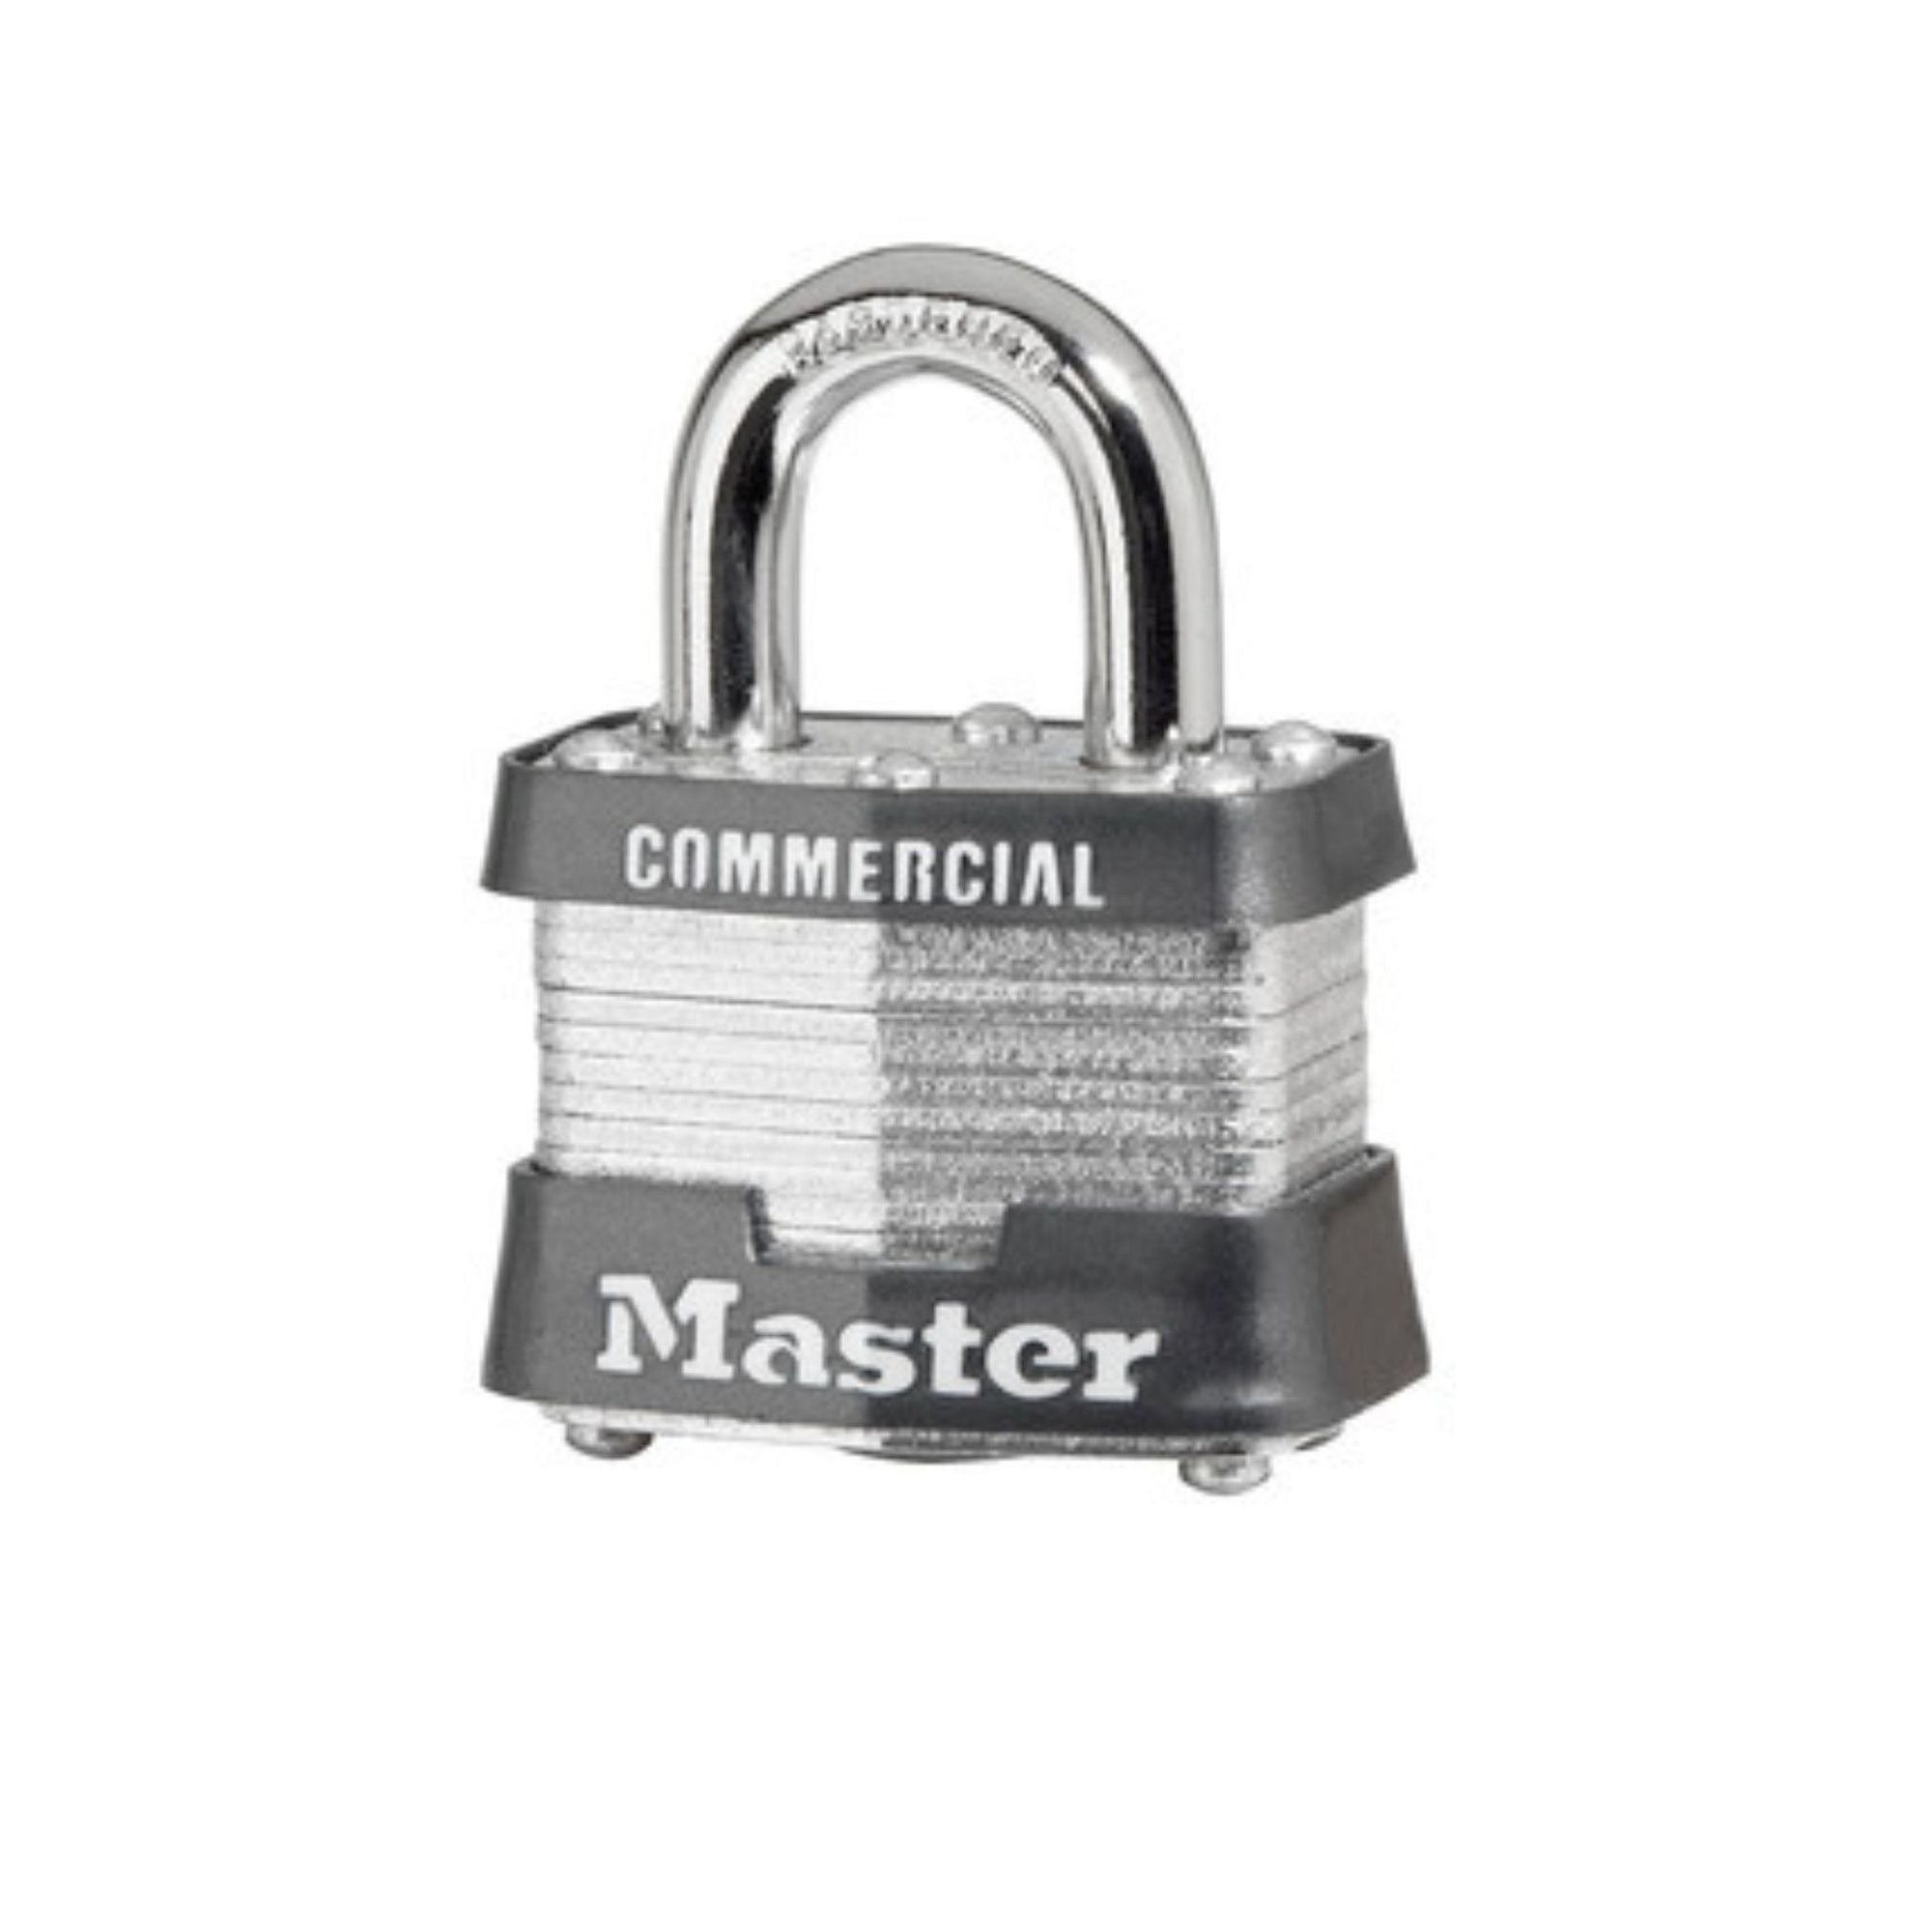 Master Lock 3KA 0314 Lock Laminated steel No. 3 Series Padlock Keyed to Match Existing Key Number KA0314 - The Lock Source